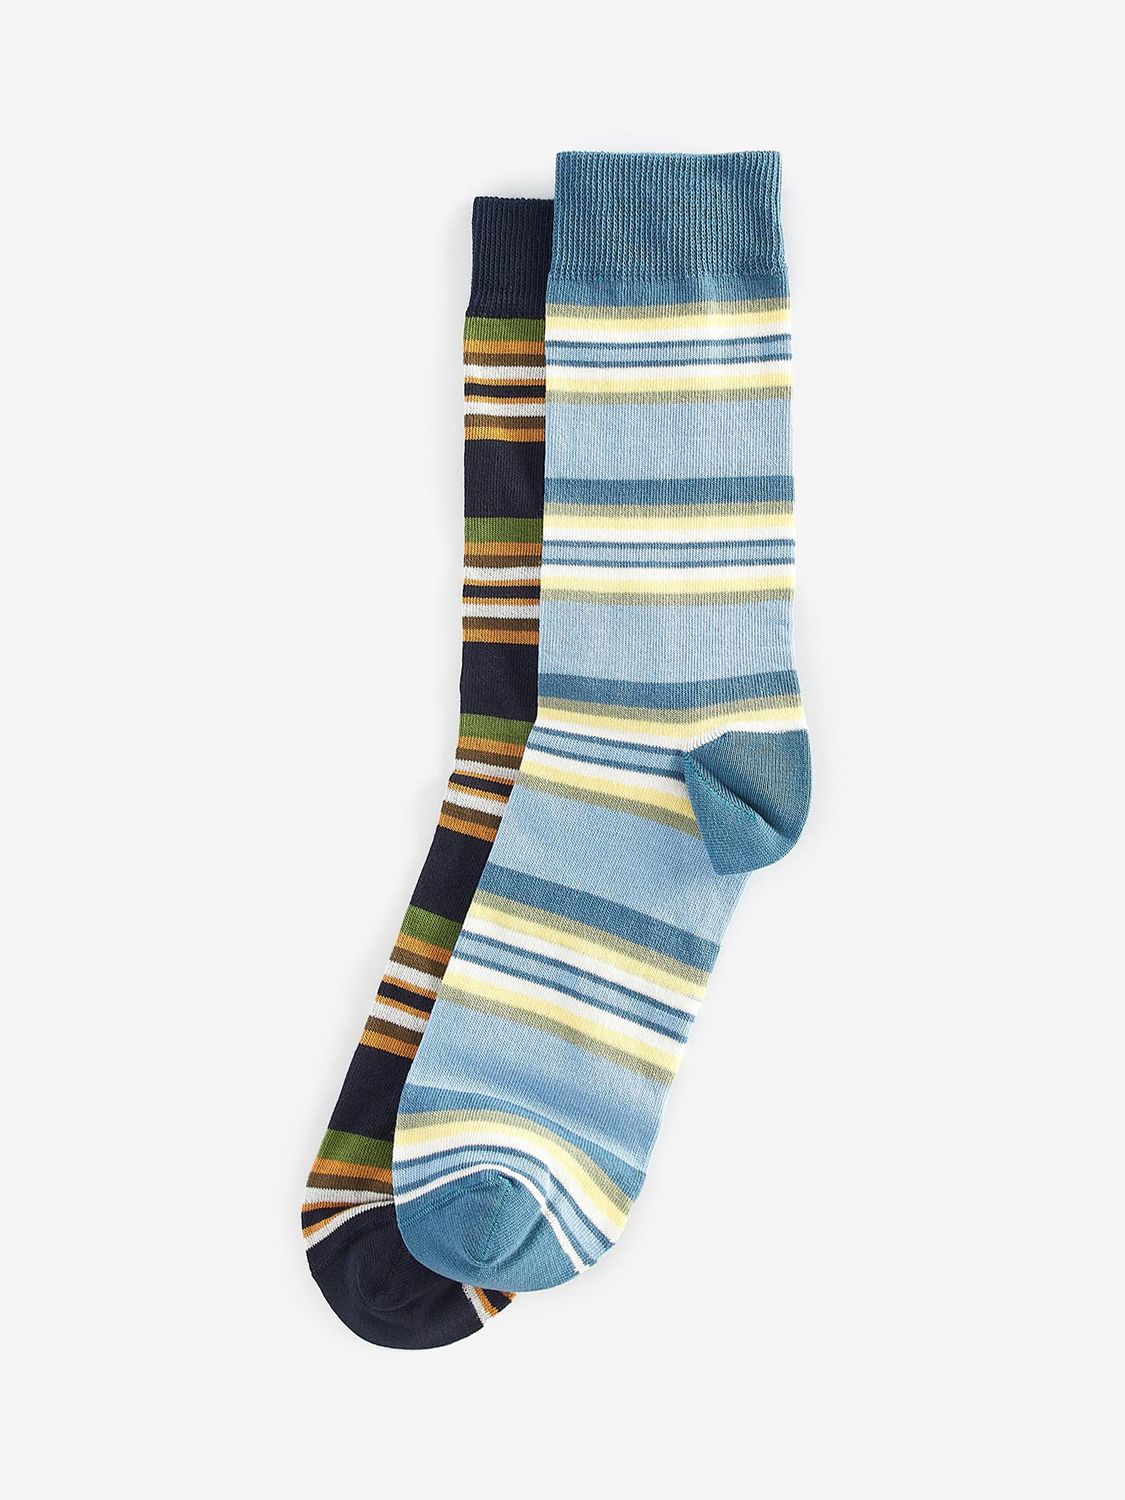 Buy Barbour Summer Stripe Socks, Pack of 2, Multi Online at johnlewis.com